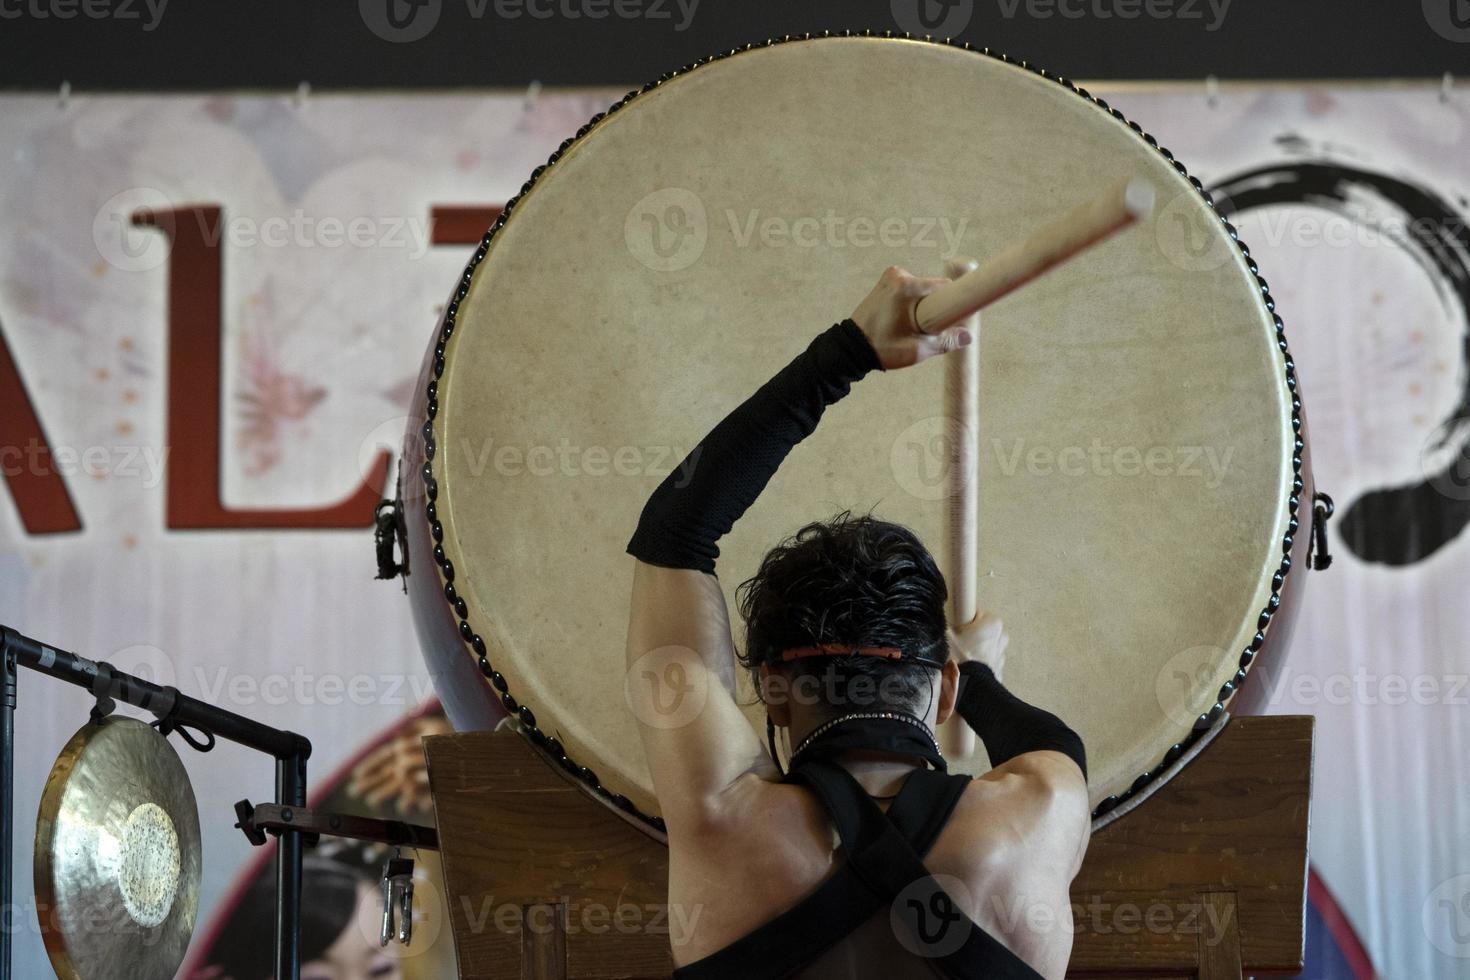 baterista japonês em ação foto